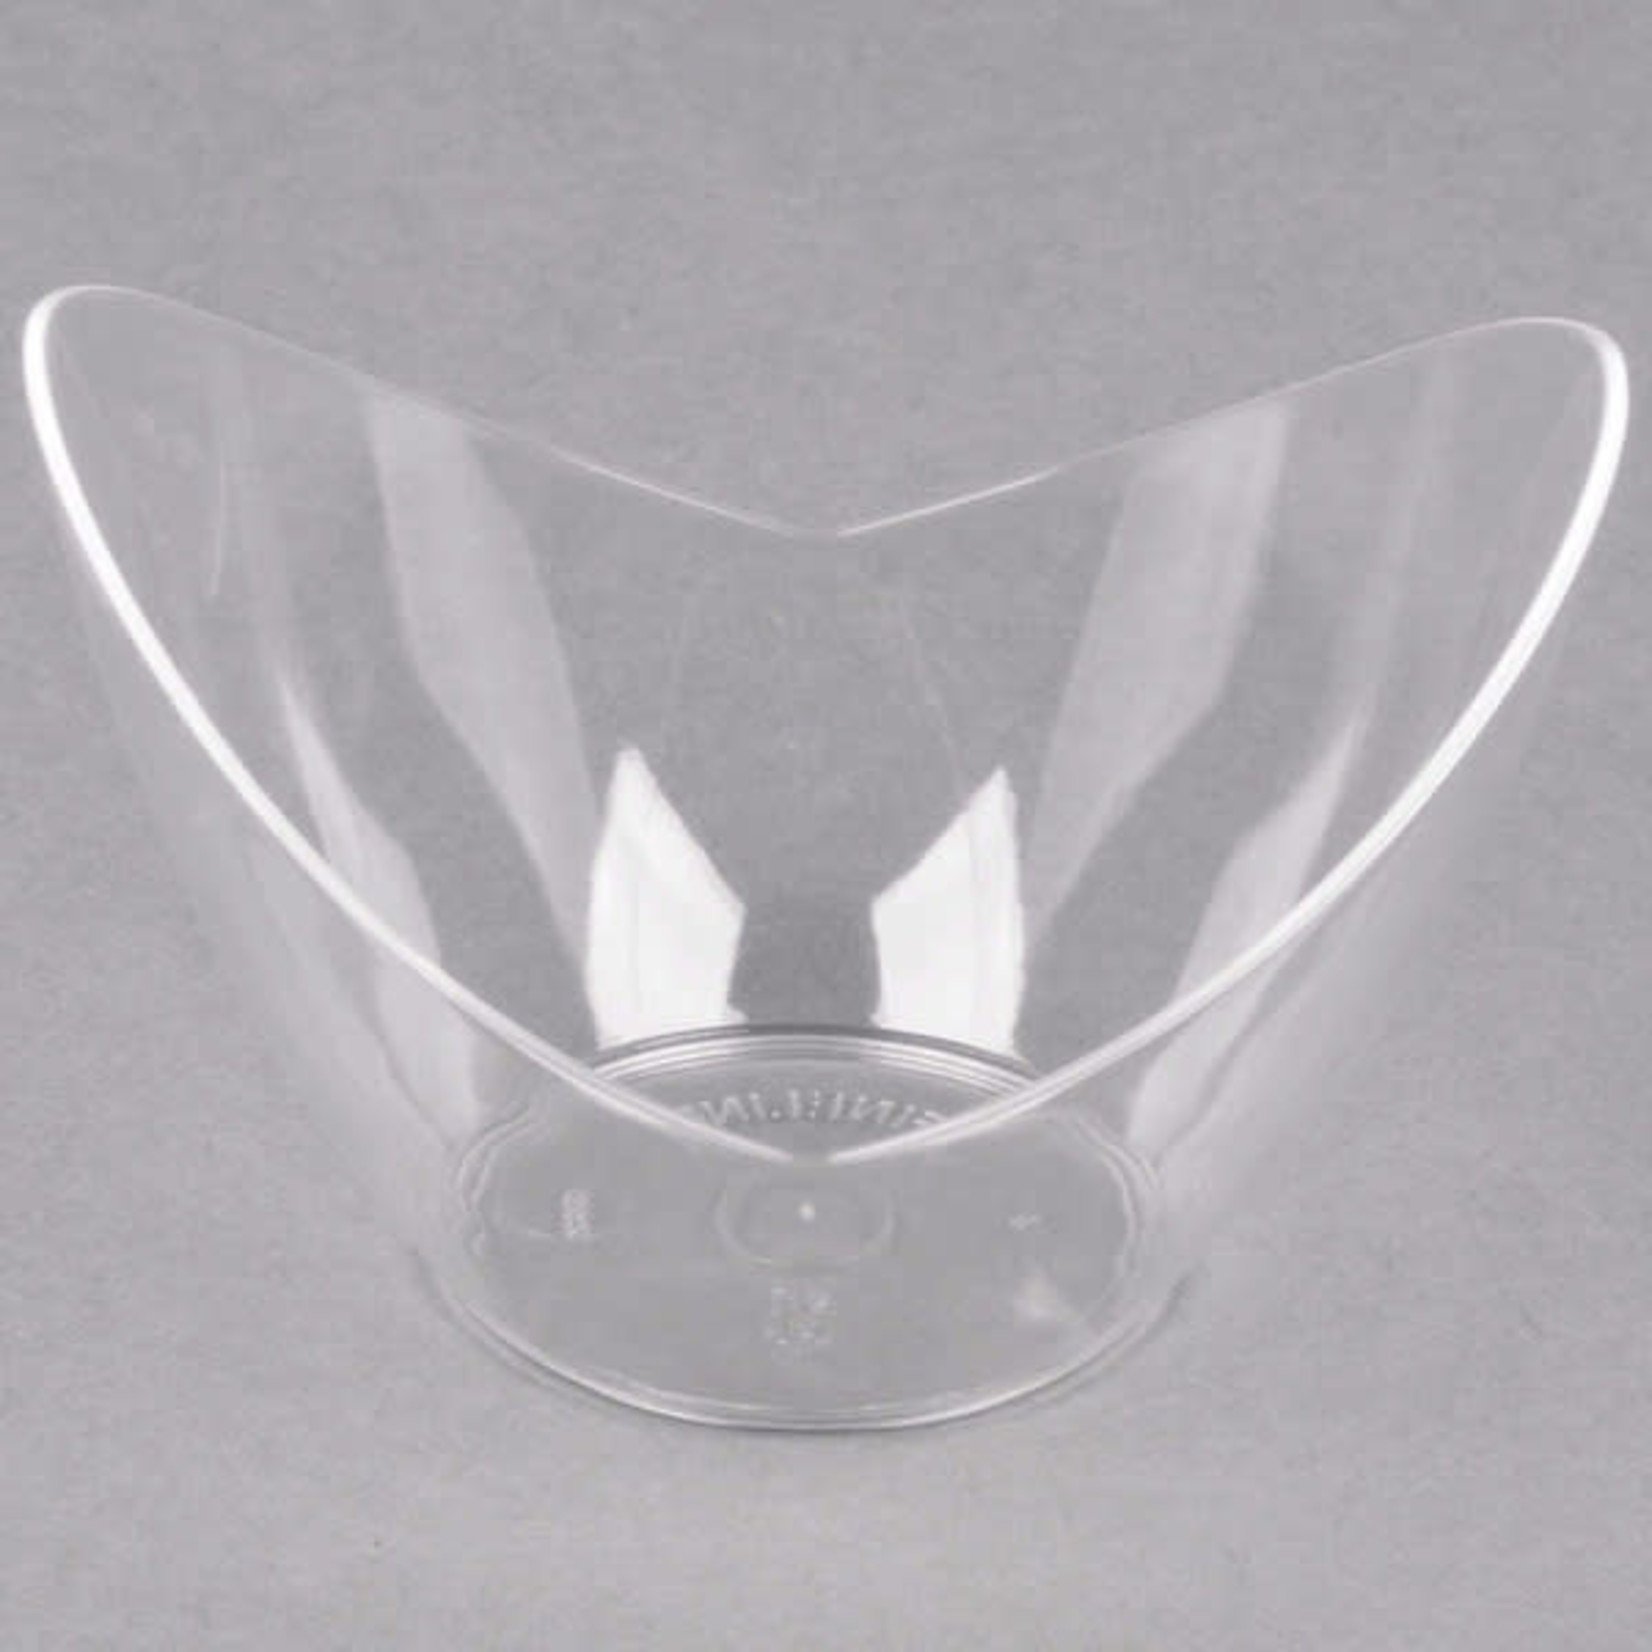 Webstaurant Clear Plastic Tiny Tureen Bowl - 3.5"x2.6" - 12/Pack